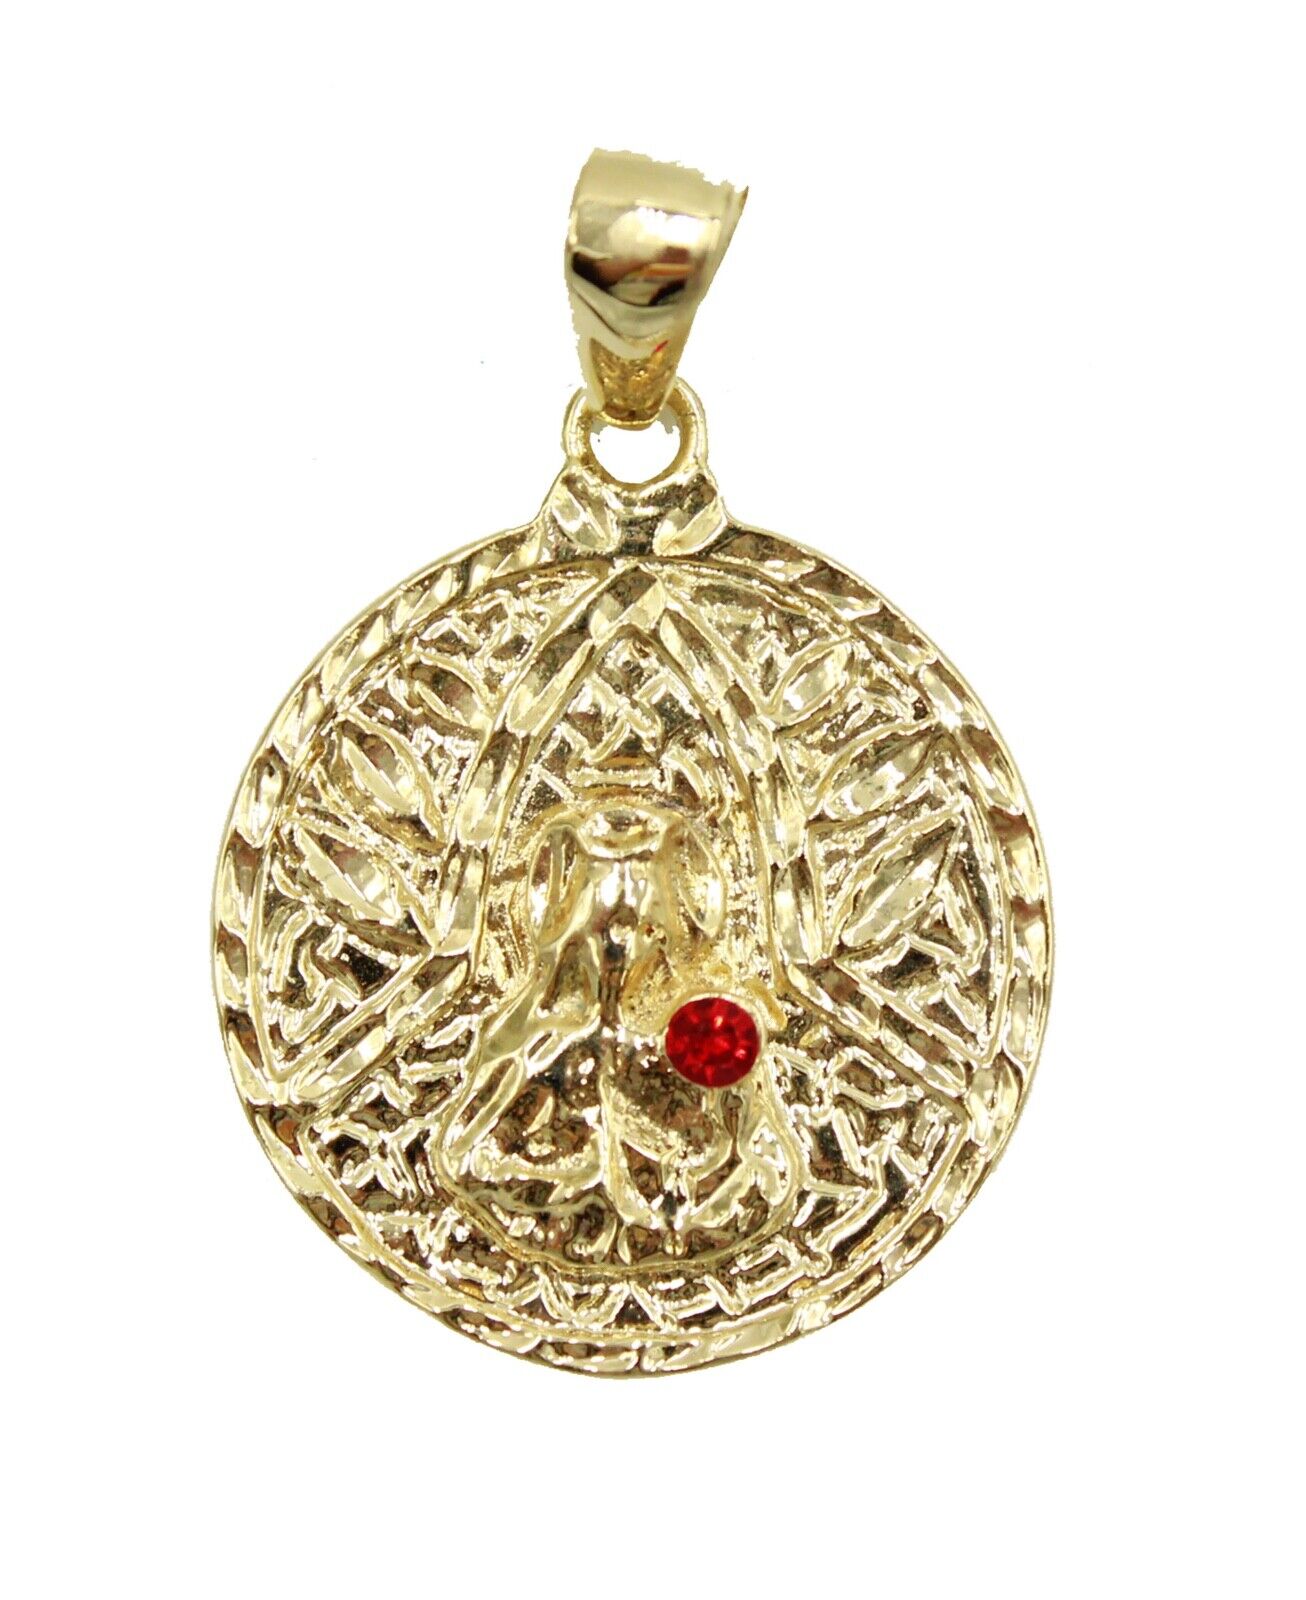 Sta. Barbara Pendant -  Santa Barbara Medal 18k Gold Plated with 22 inch Chain